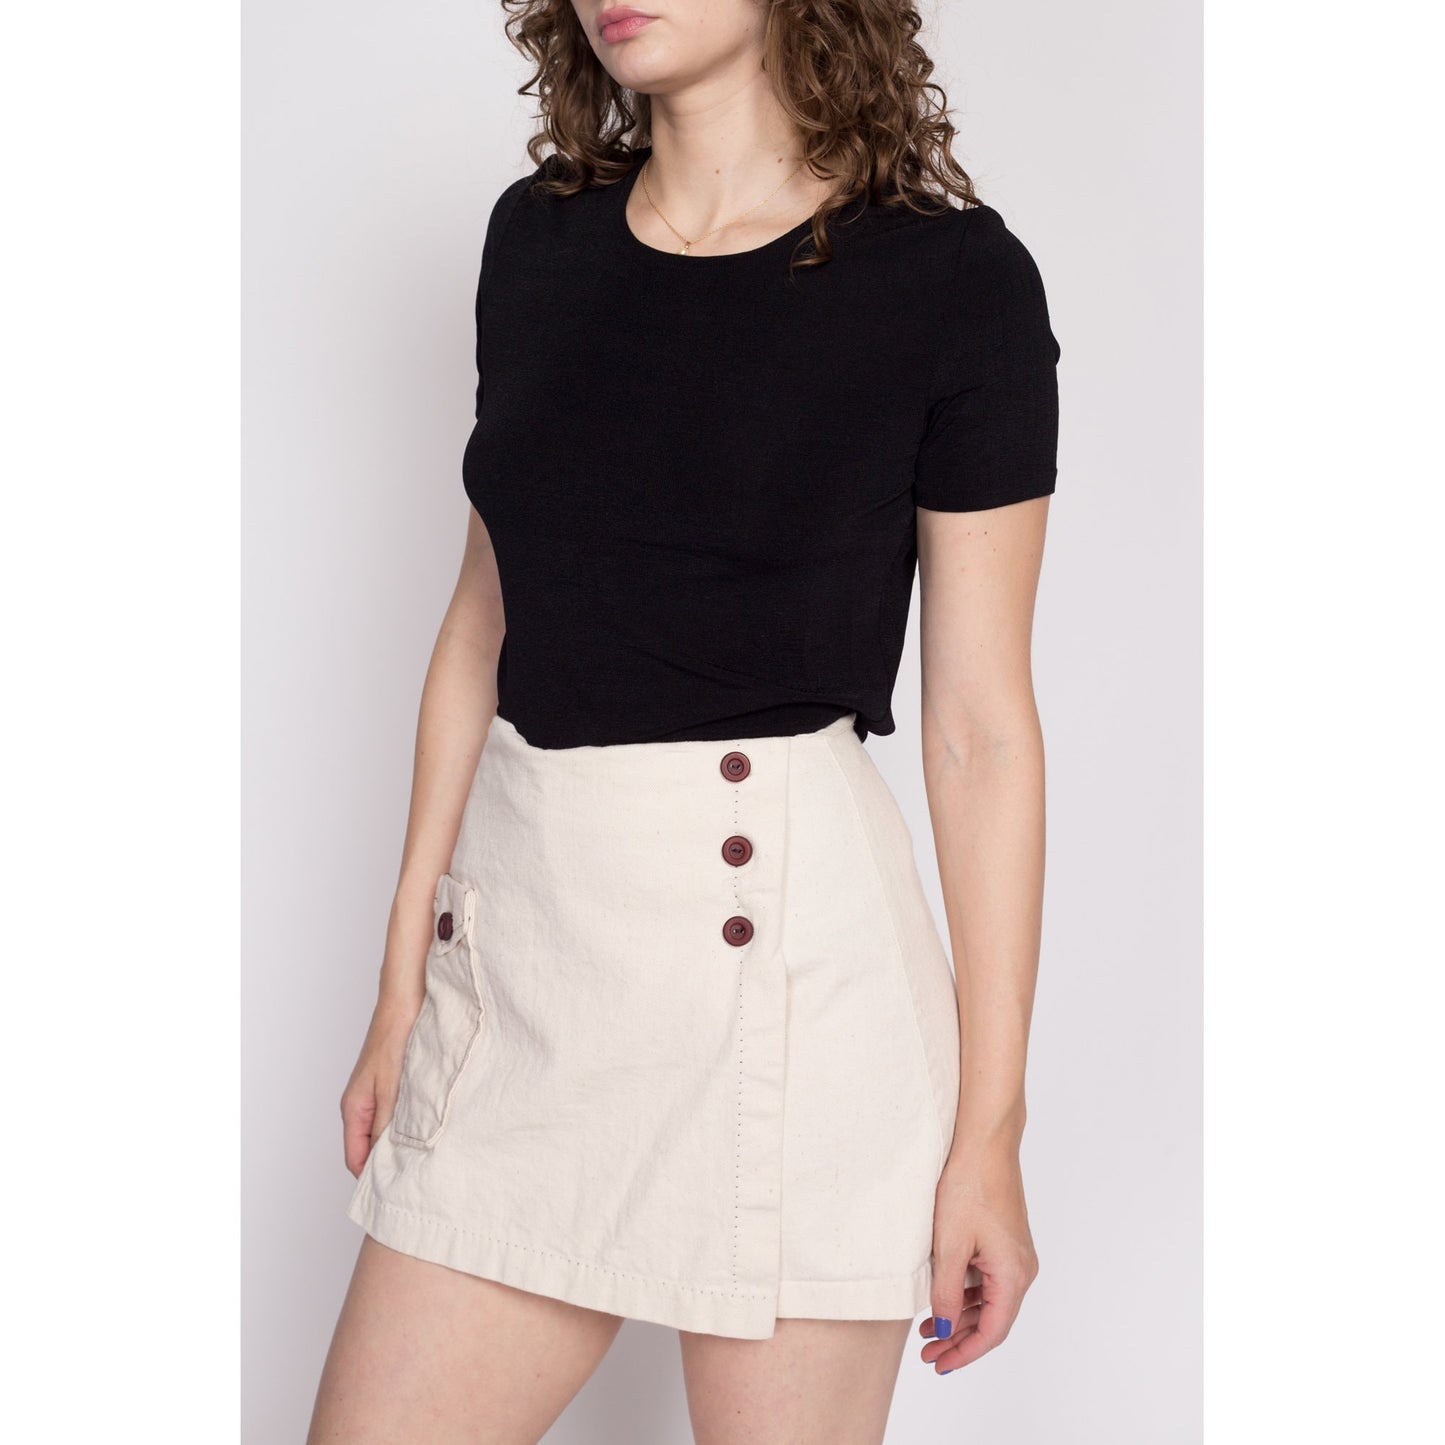 M| 90s Slinky Black Top - Medium | Vintage Plain Stretchy Short Sleeve Shirt